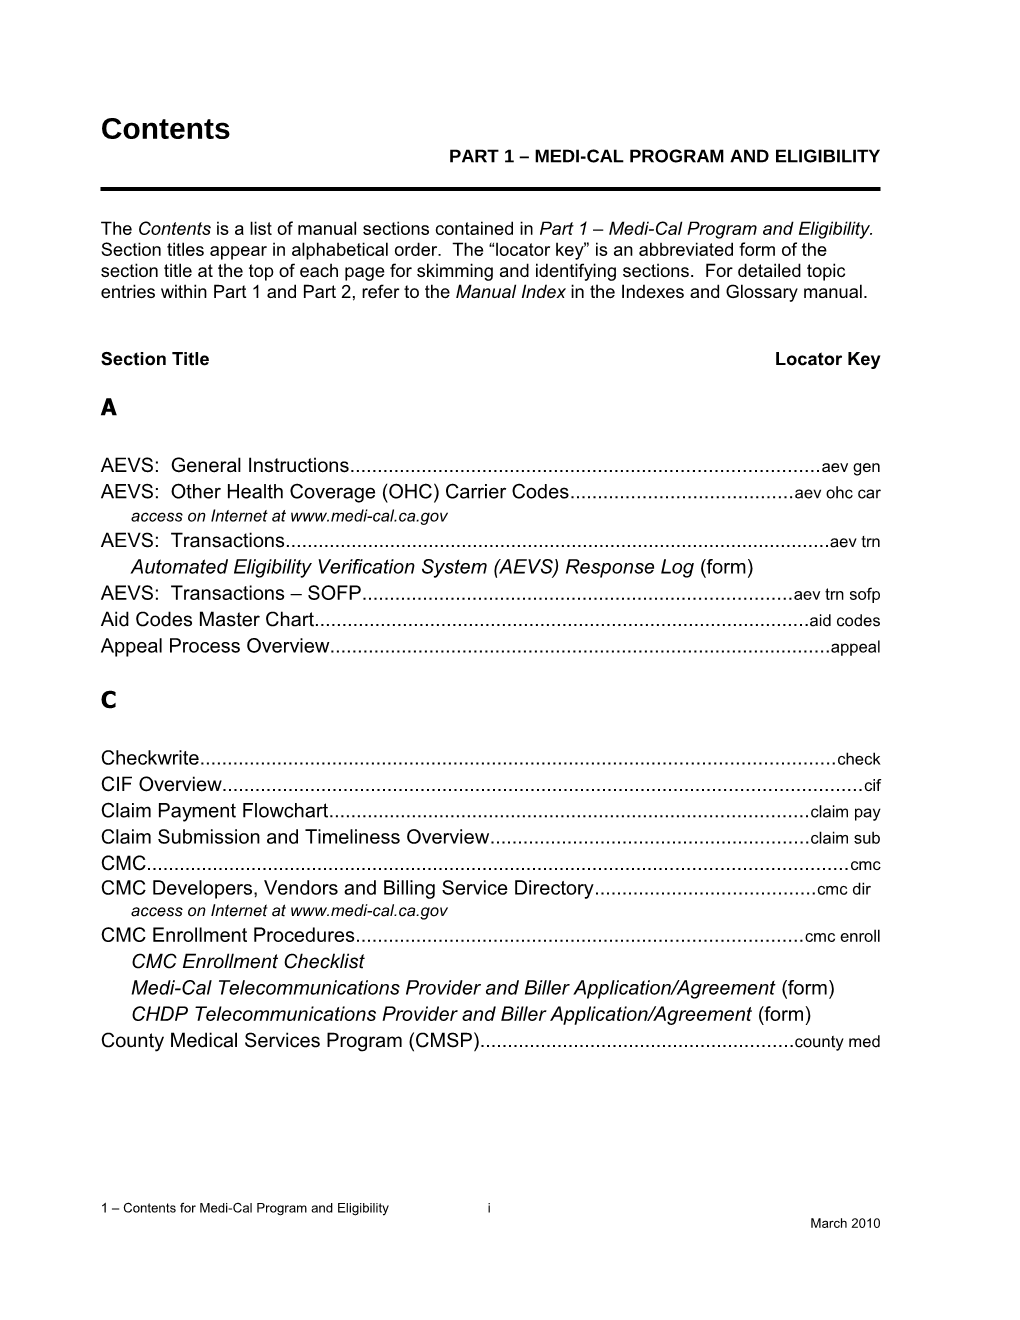 Contents Part 1 Medi-Cal Program and Eligibility (1Toc)